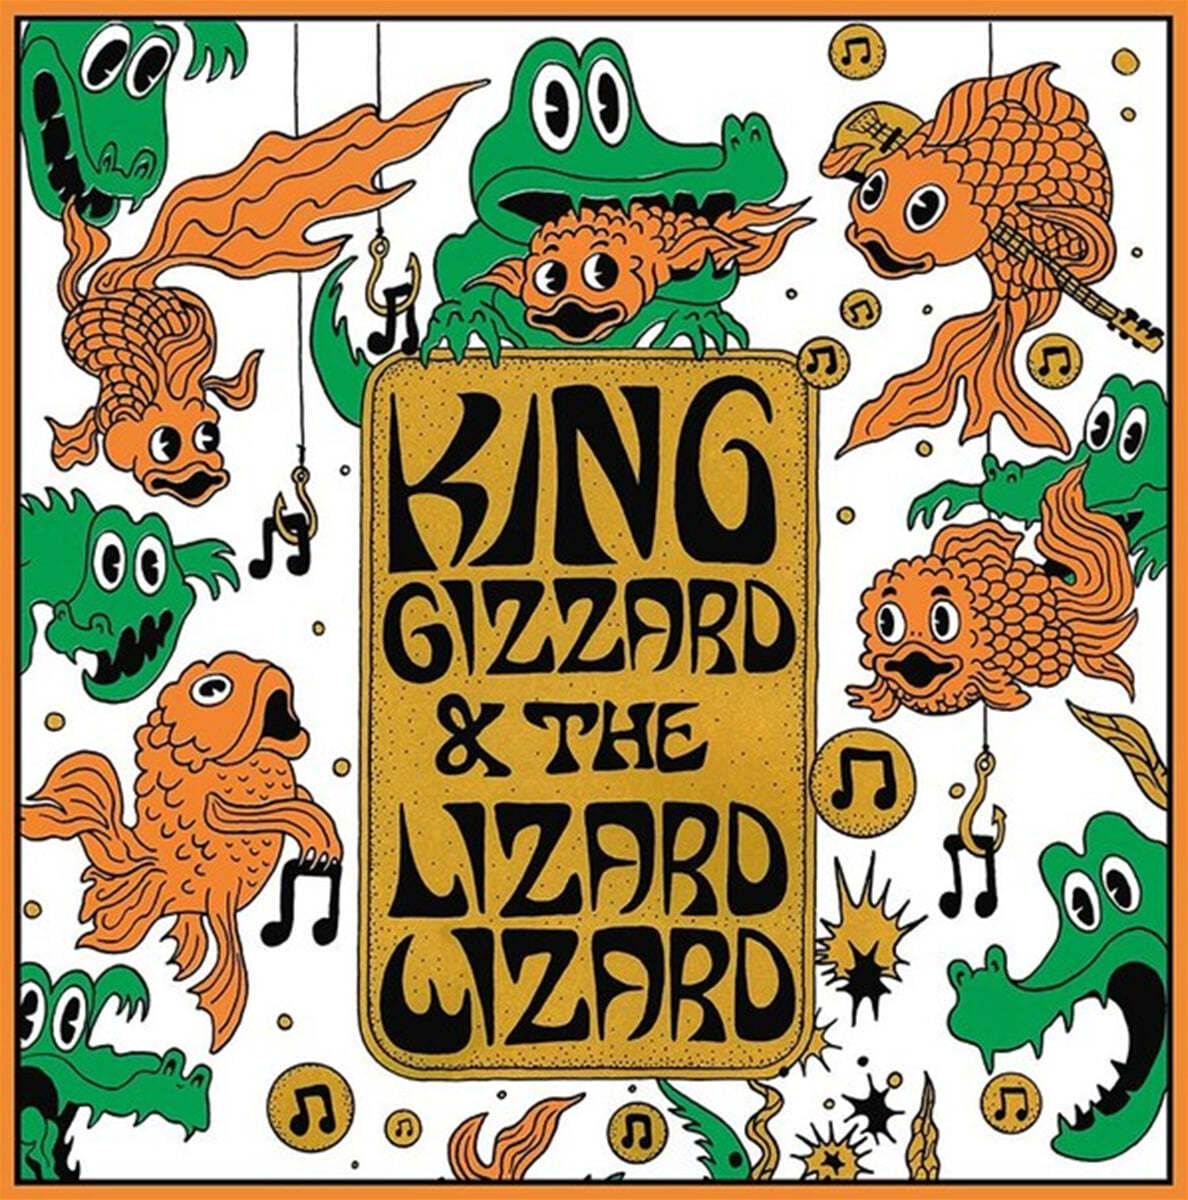 King Gizzard and the lizzard wizzard (킹기자드 앤 더 리자드 위자드) - Live in Milwaukee [오렌지 컬러 3LP]